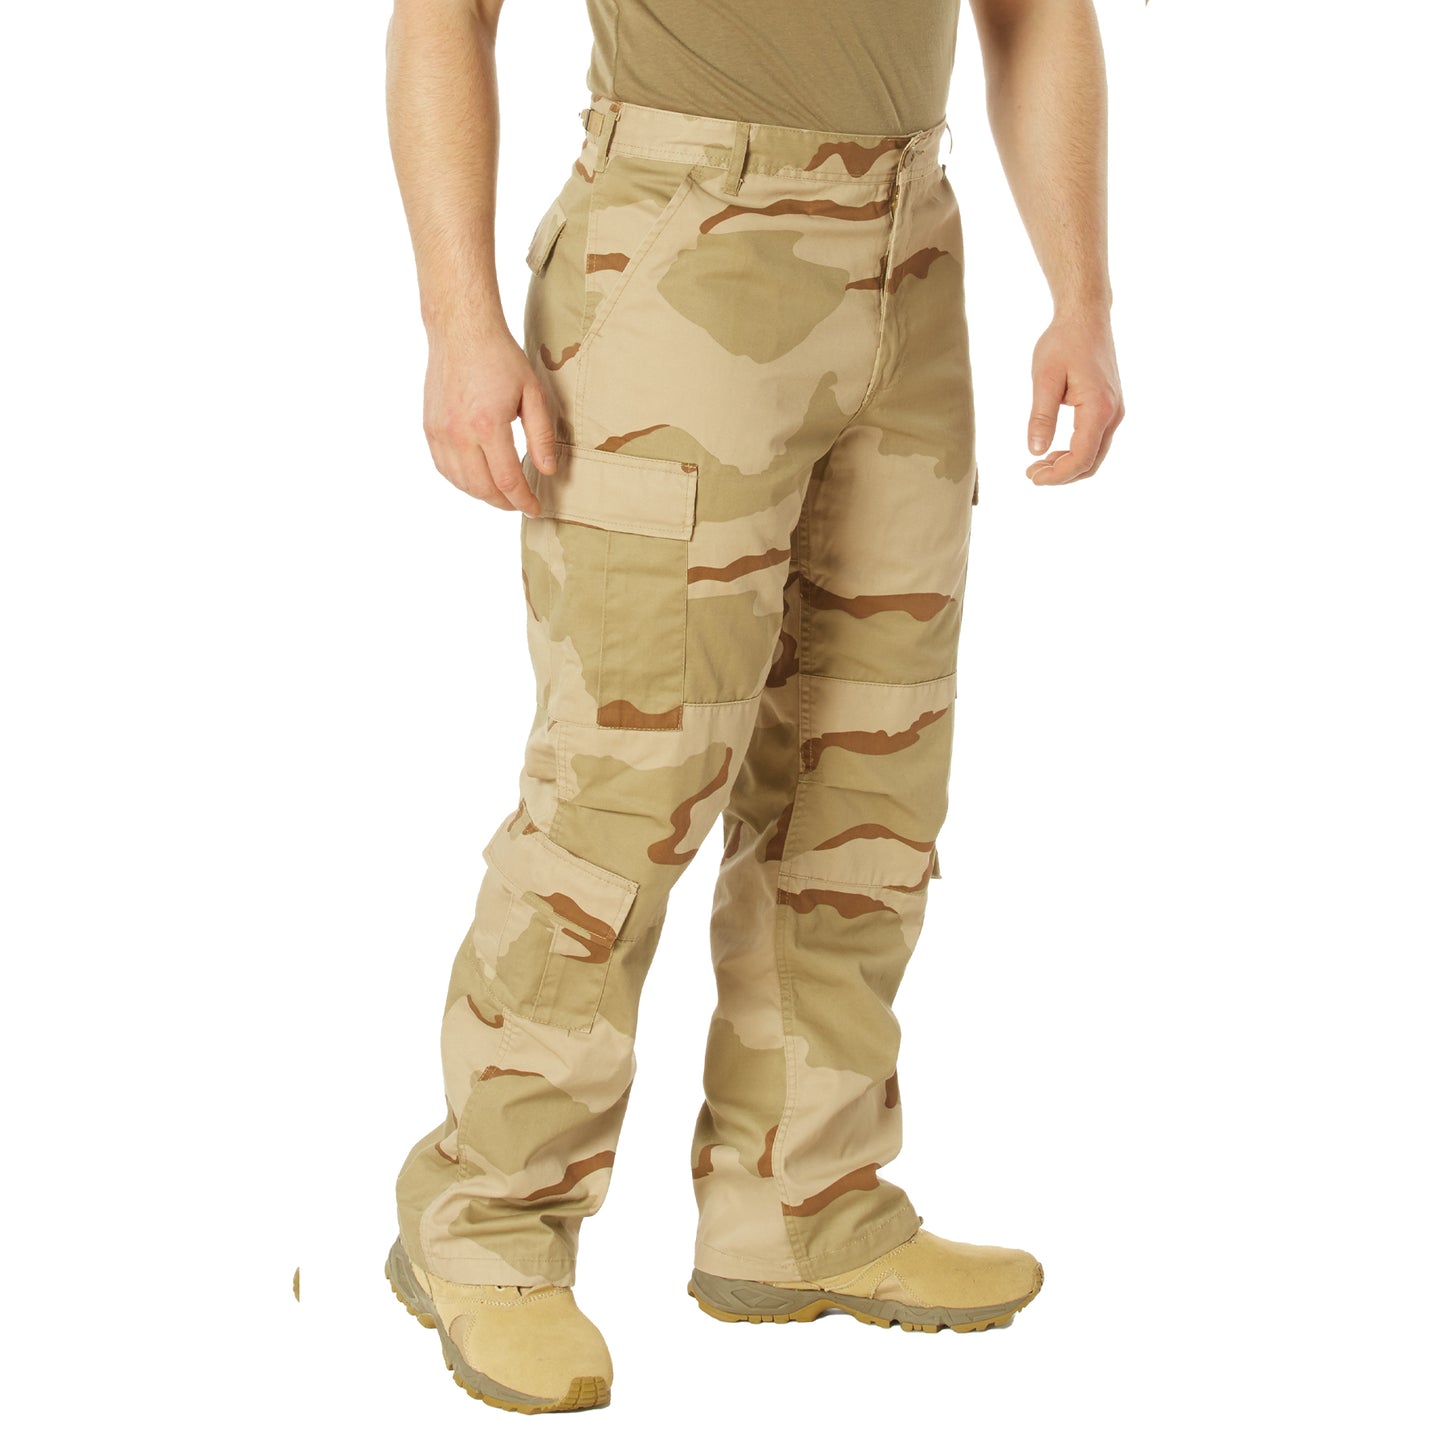 Rothco Vintage Camo Paratrooper Fatigue Pants - Tri Color Desert Camo